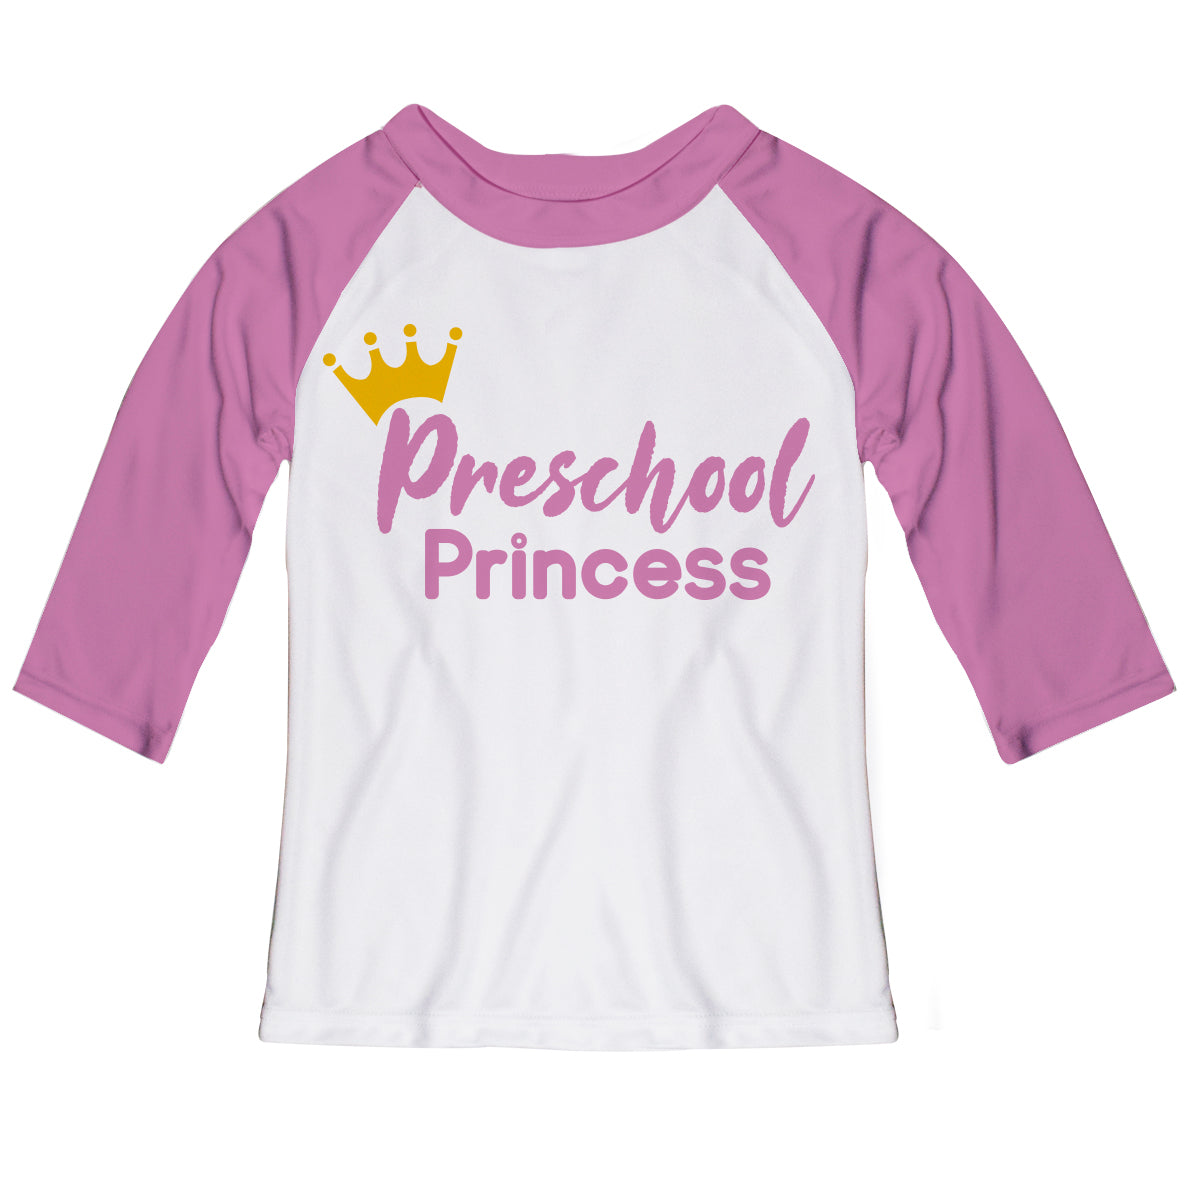 Preschool Princess White And Pink Raglan Tee Shirt - Wimziy&Co.